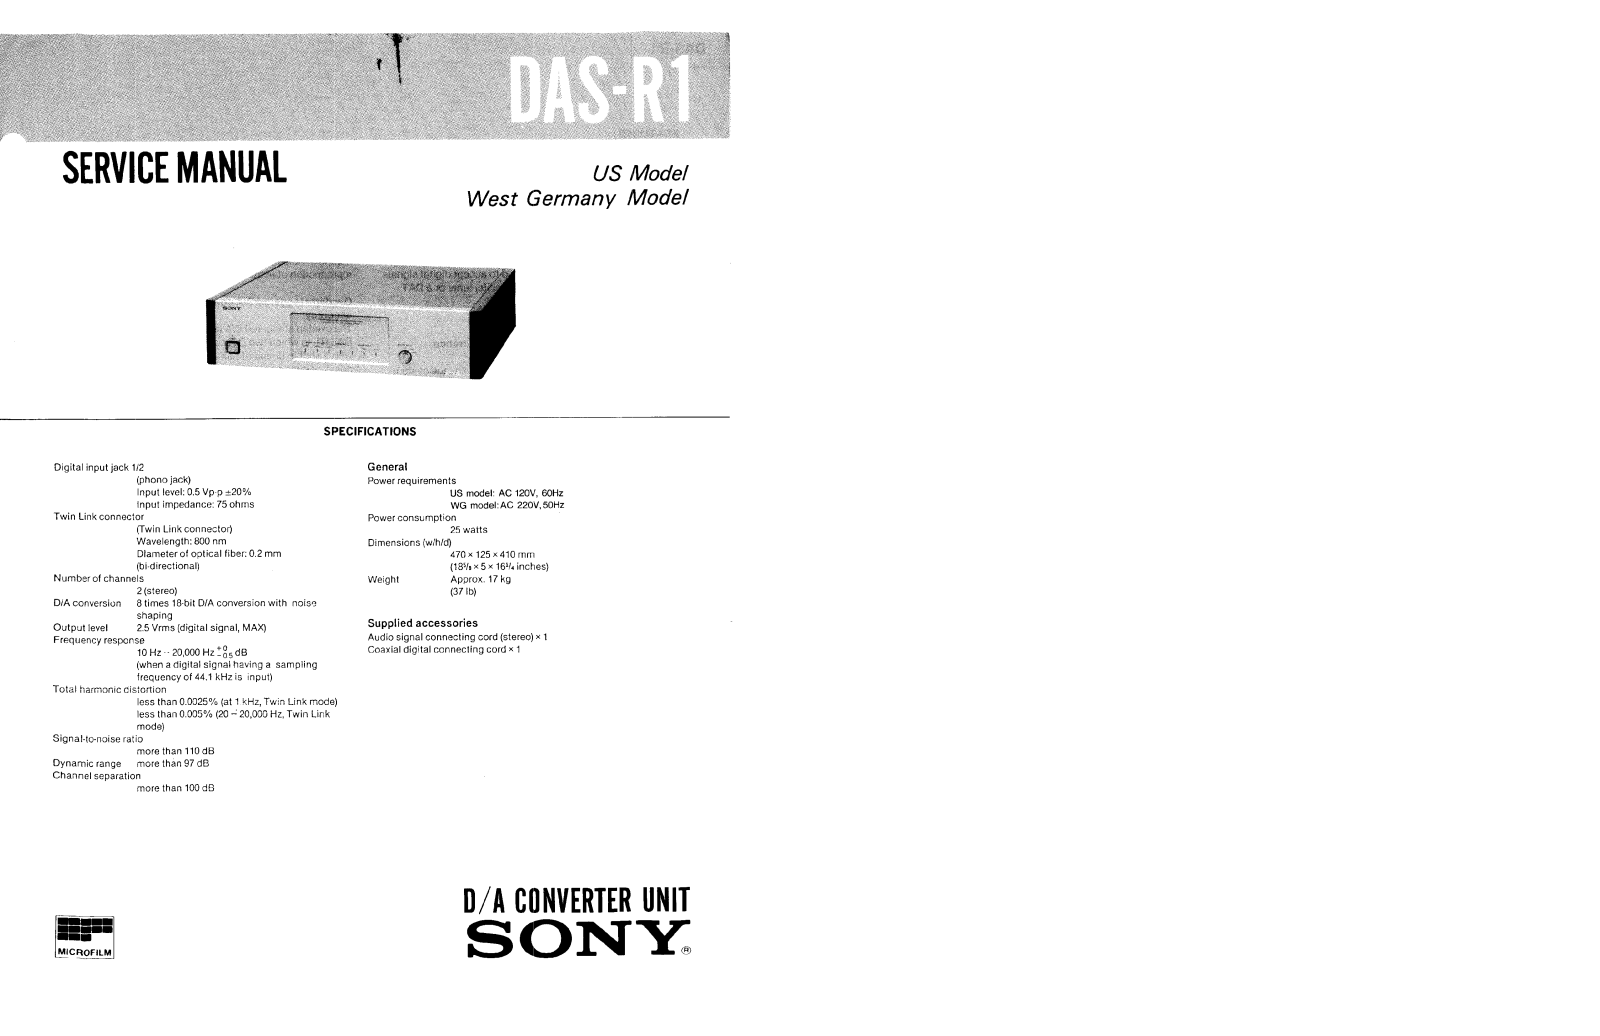 Sony DAS-R1 Service Manual